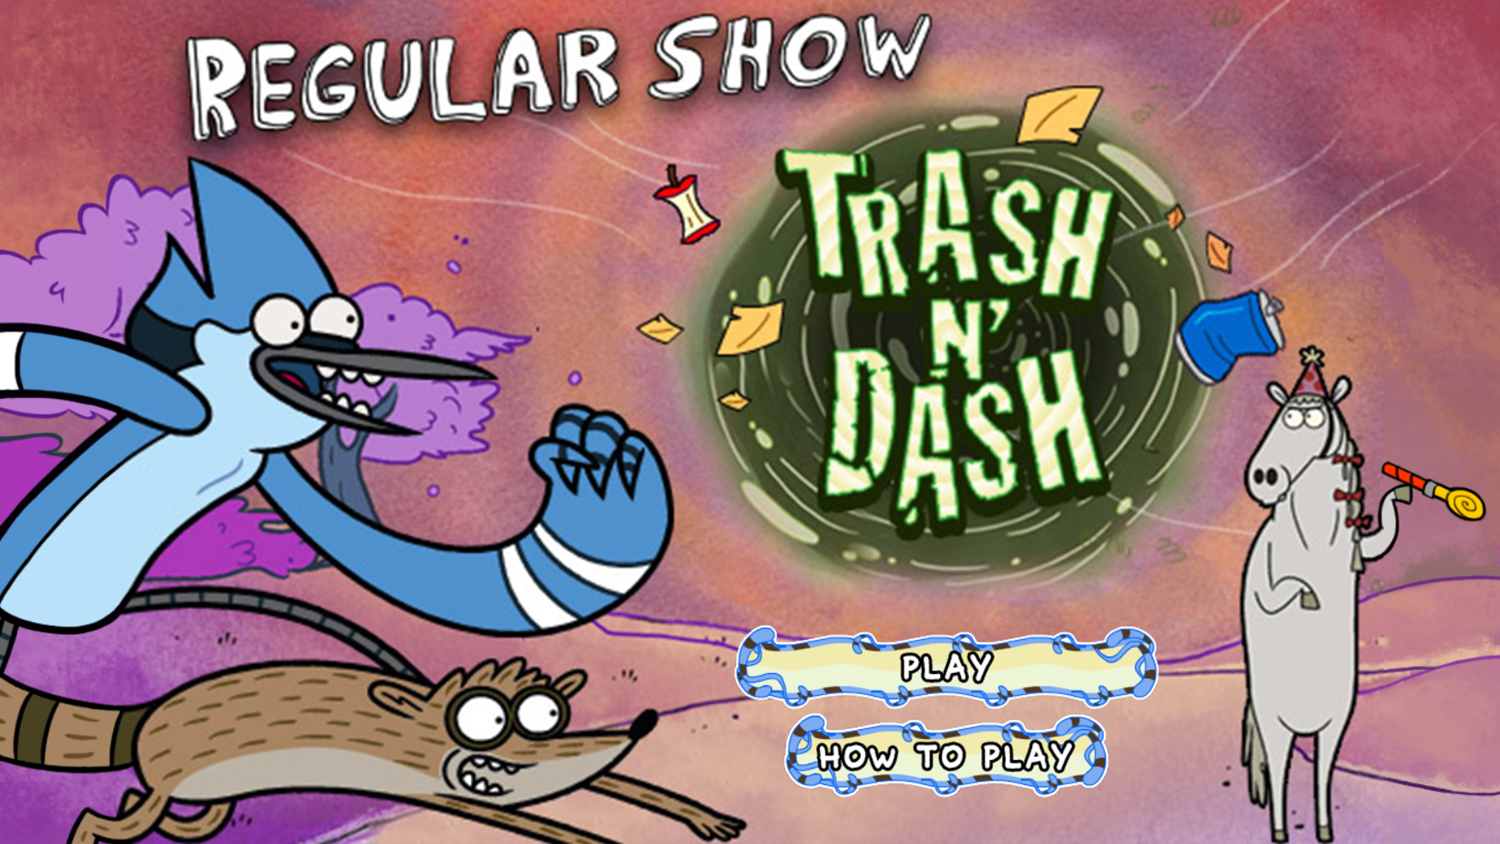 Regular Show Trash and Dash Game Welcome Screen Screenshot.